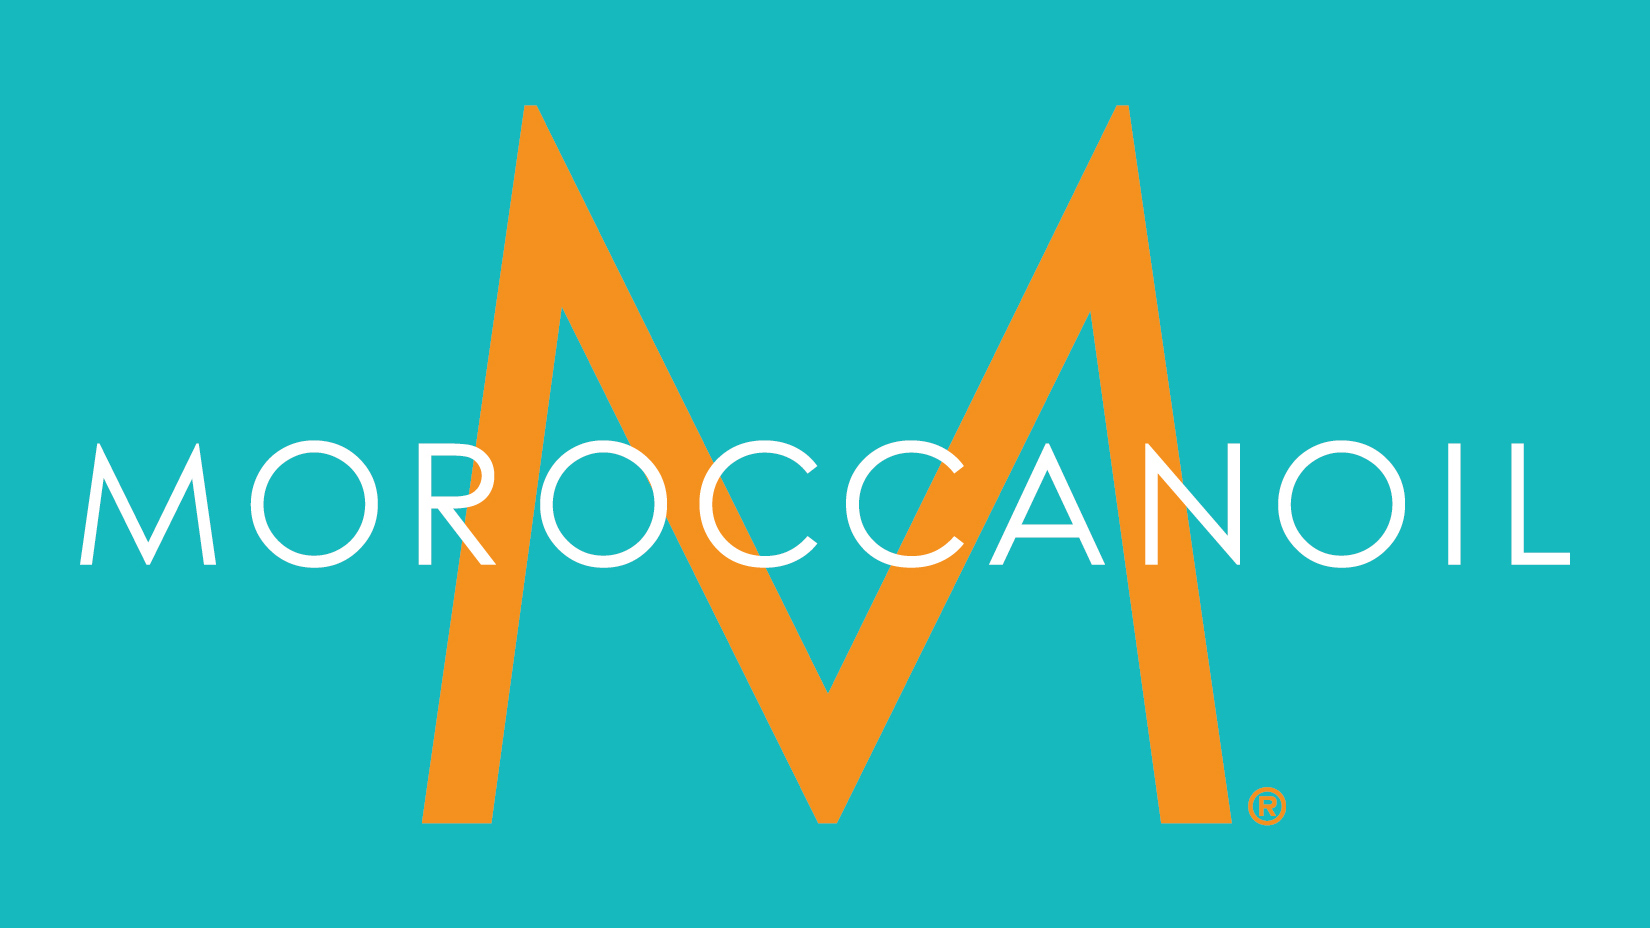 Moroccanoil Logo Image